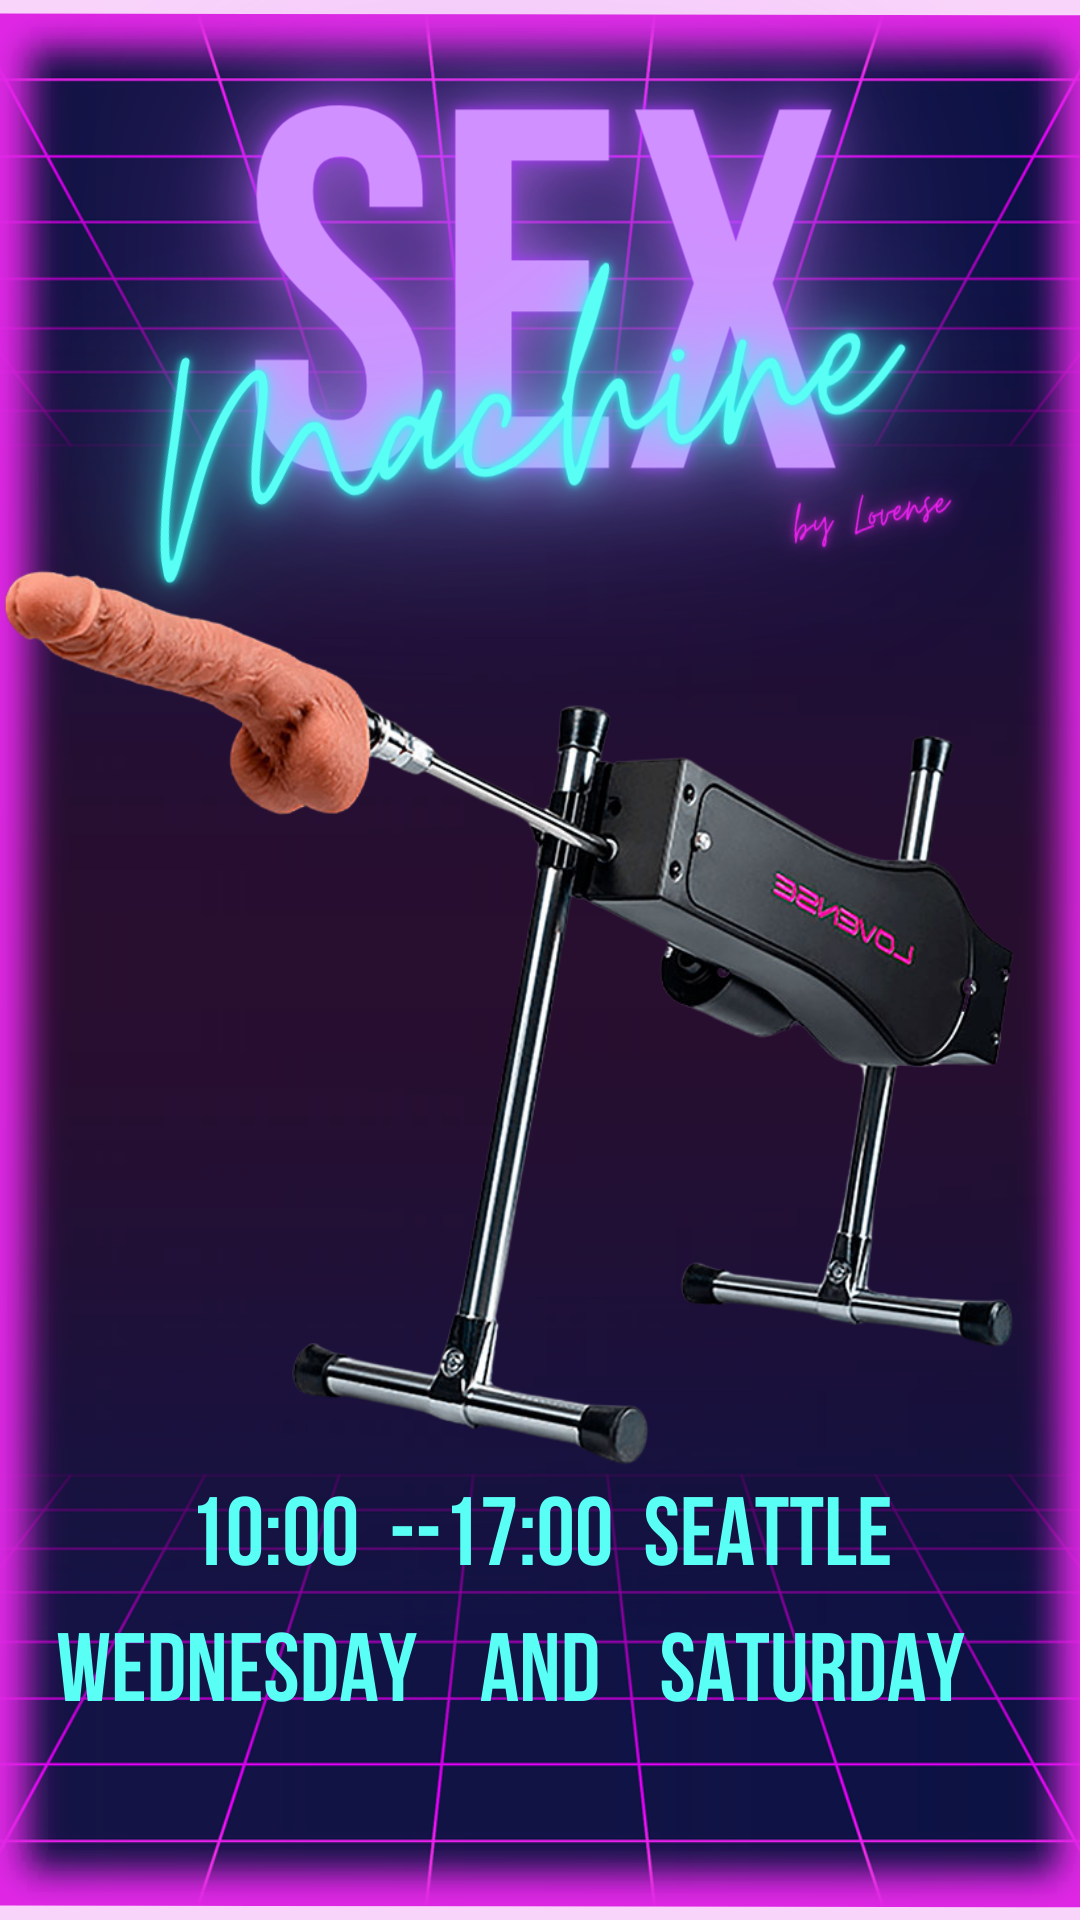 alexastarck sex machine image: 1